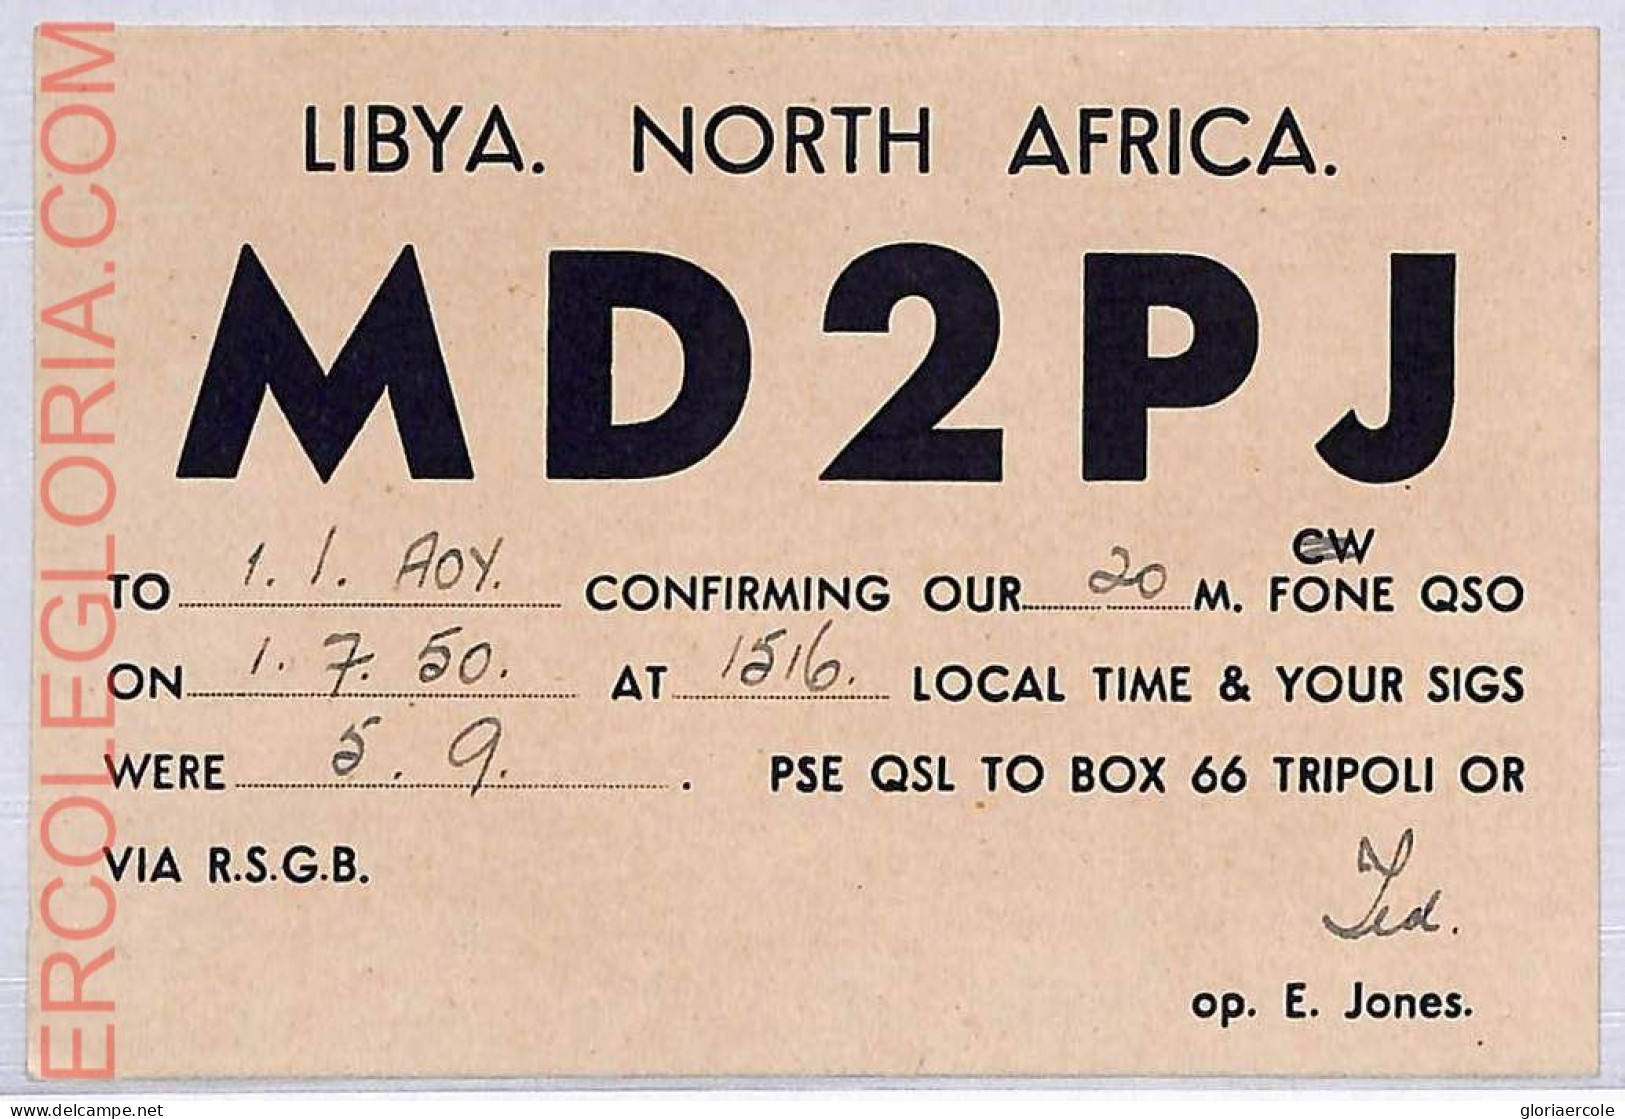 Ad9216 - LIBYA - RADIO FREQUENCY CARD  - 1950 - Radio